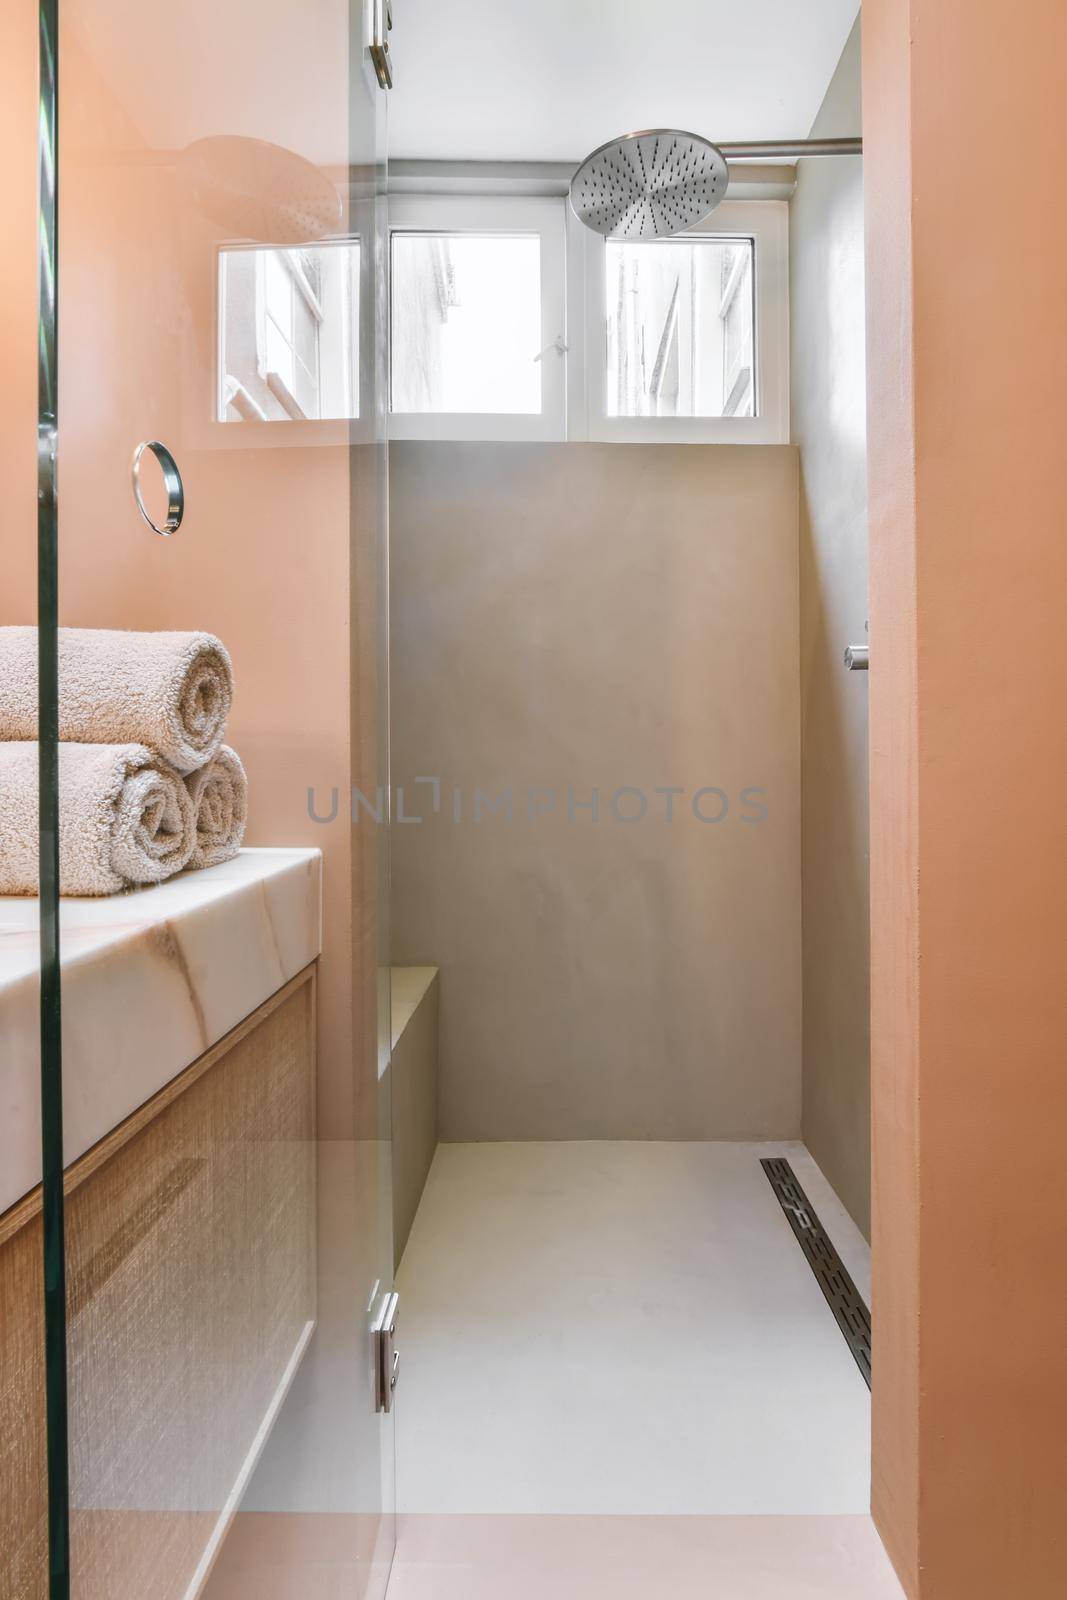 Luxurious bathroom with peach walls by casamedia